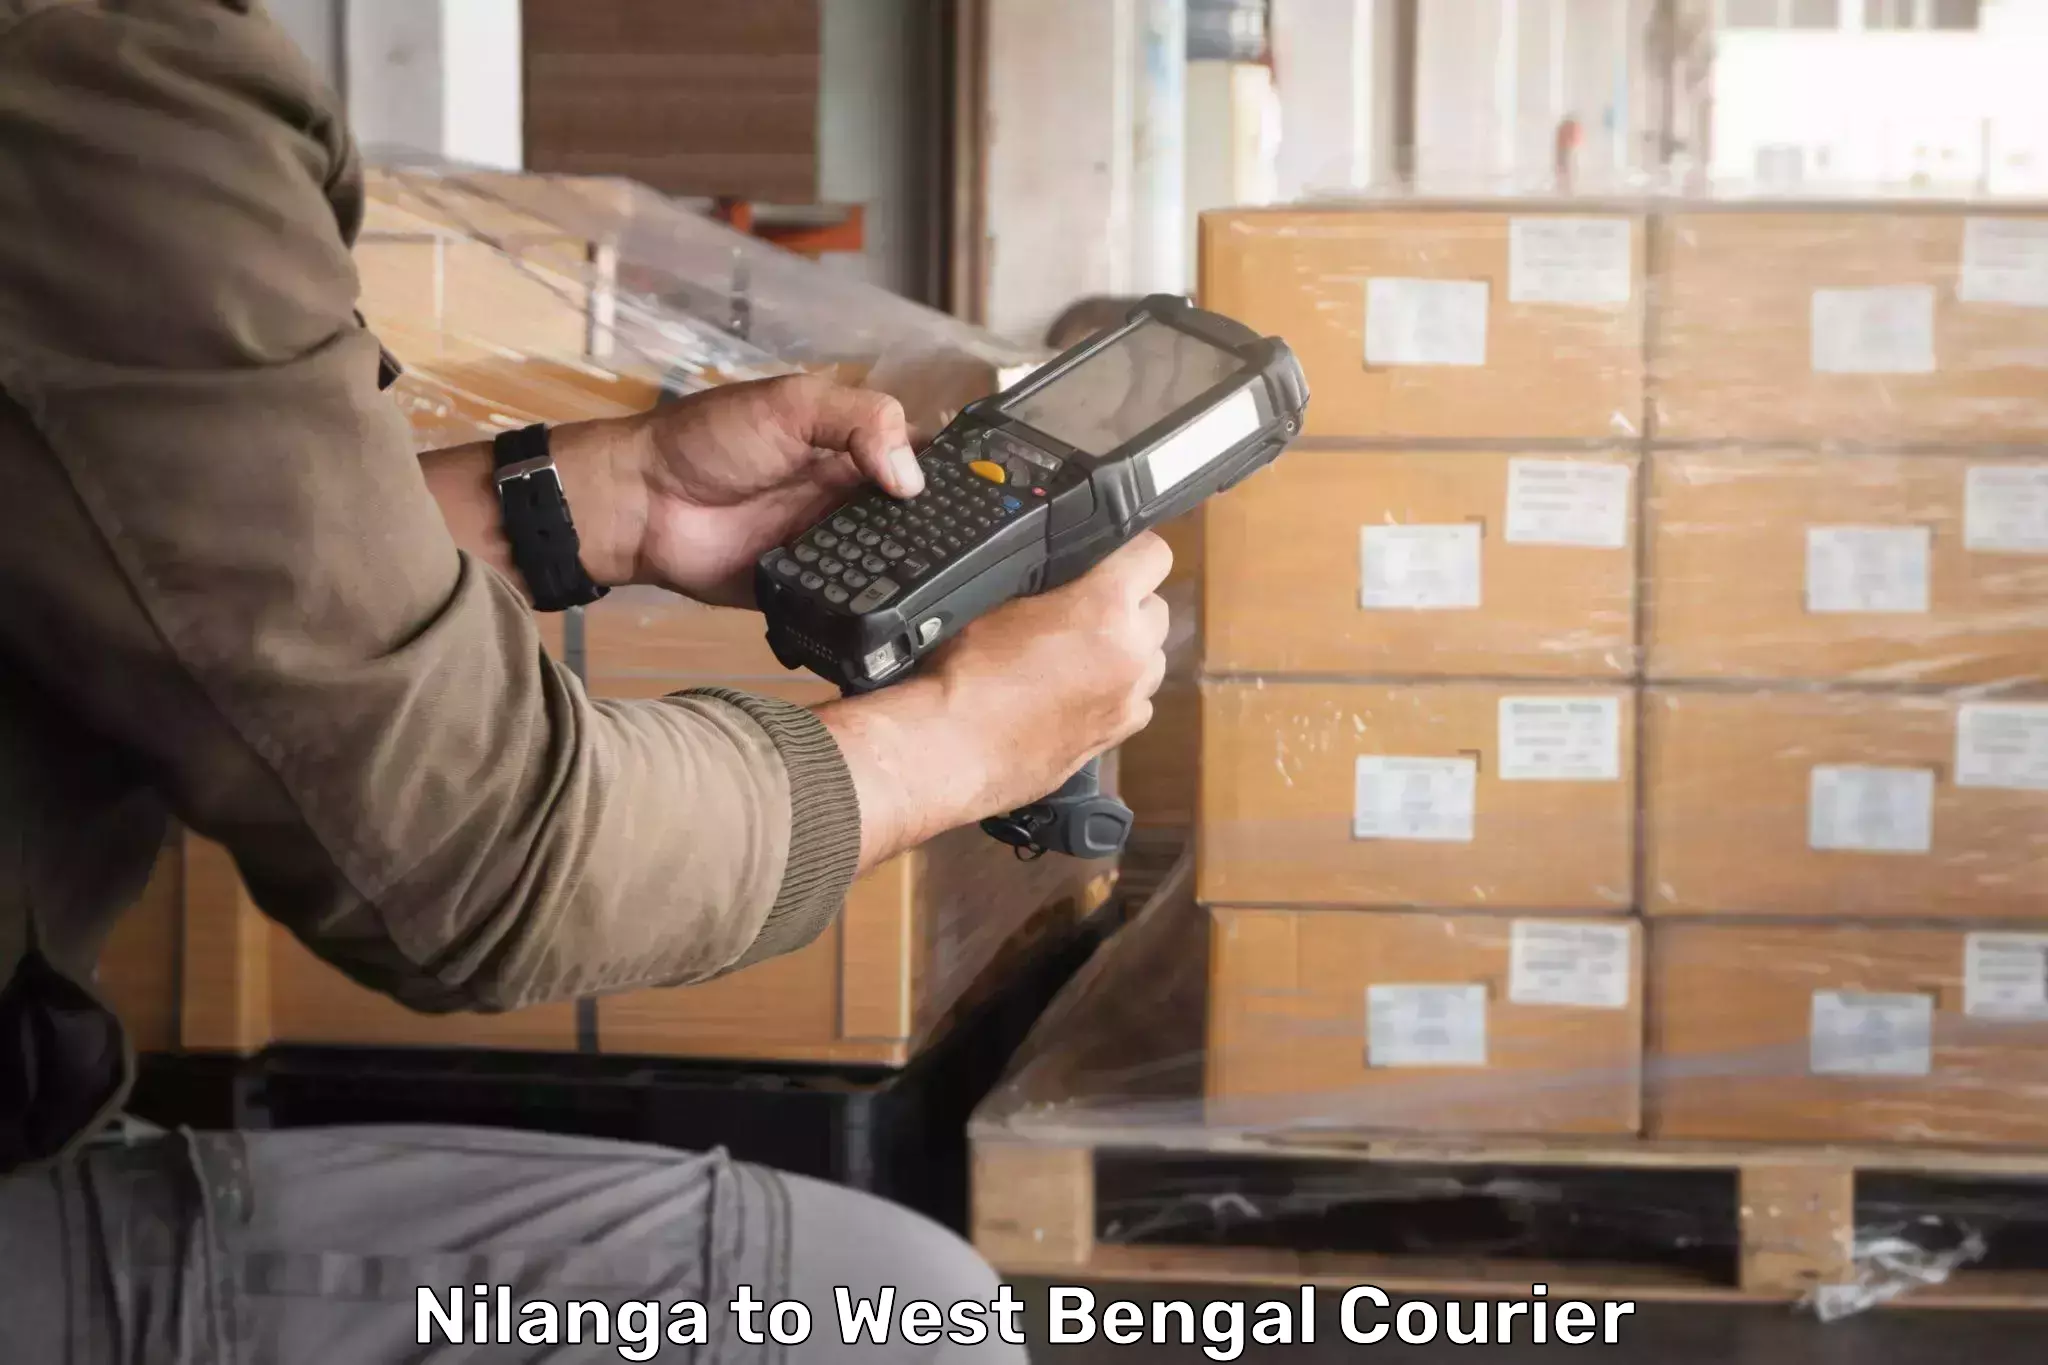 Customer-centric shipping Nilanga to Chalsa